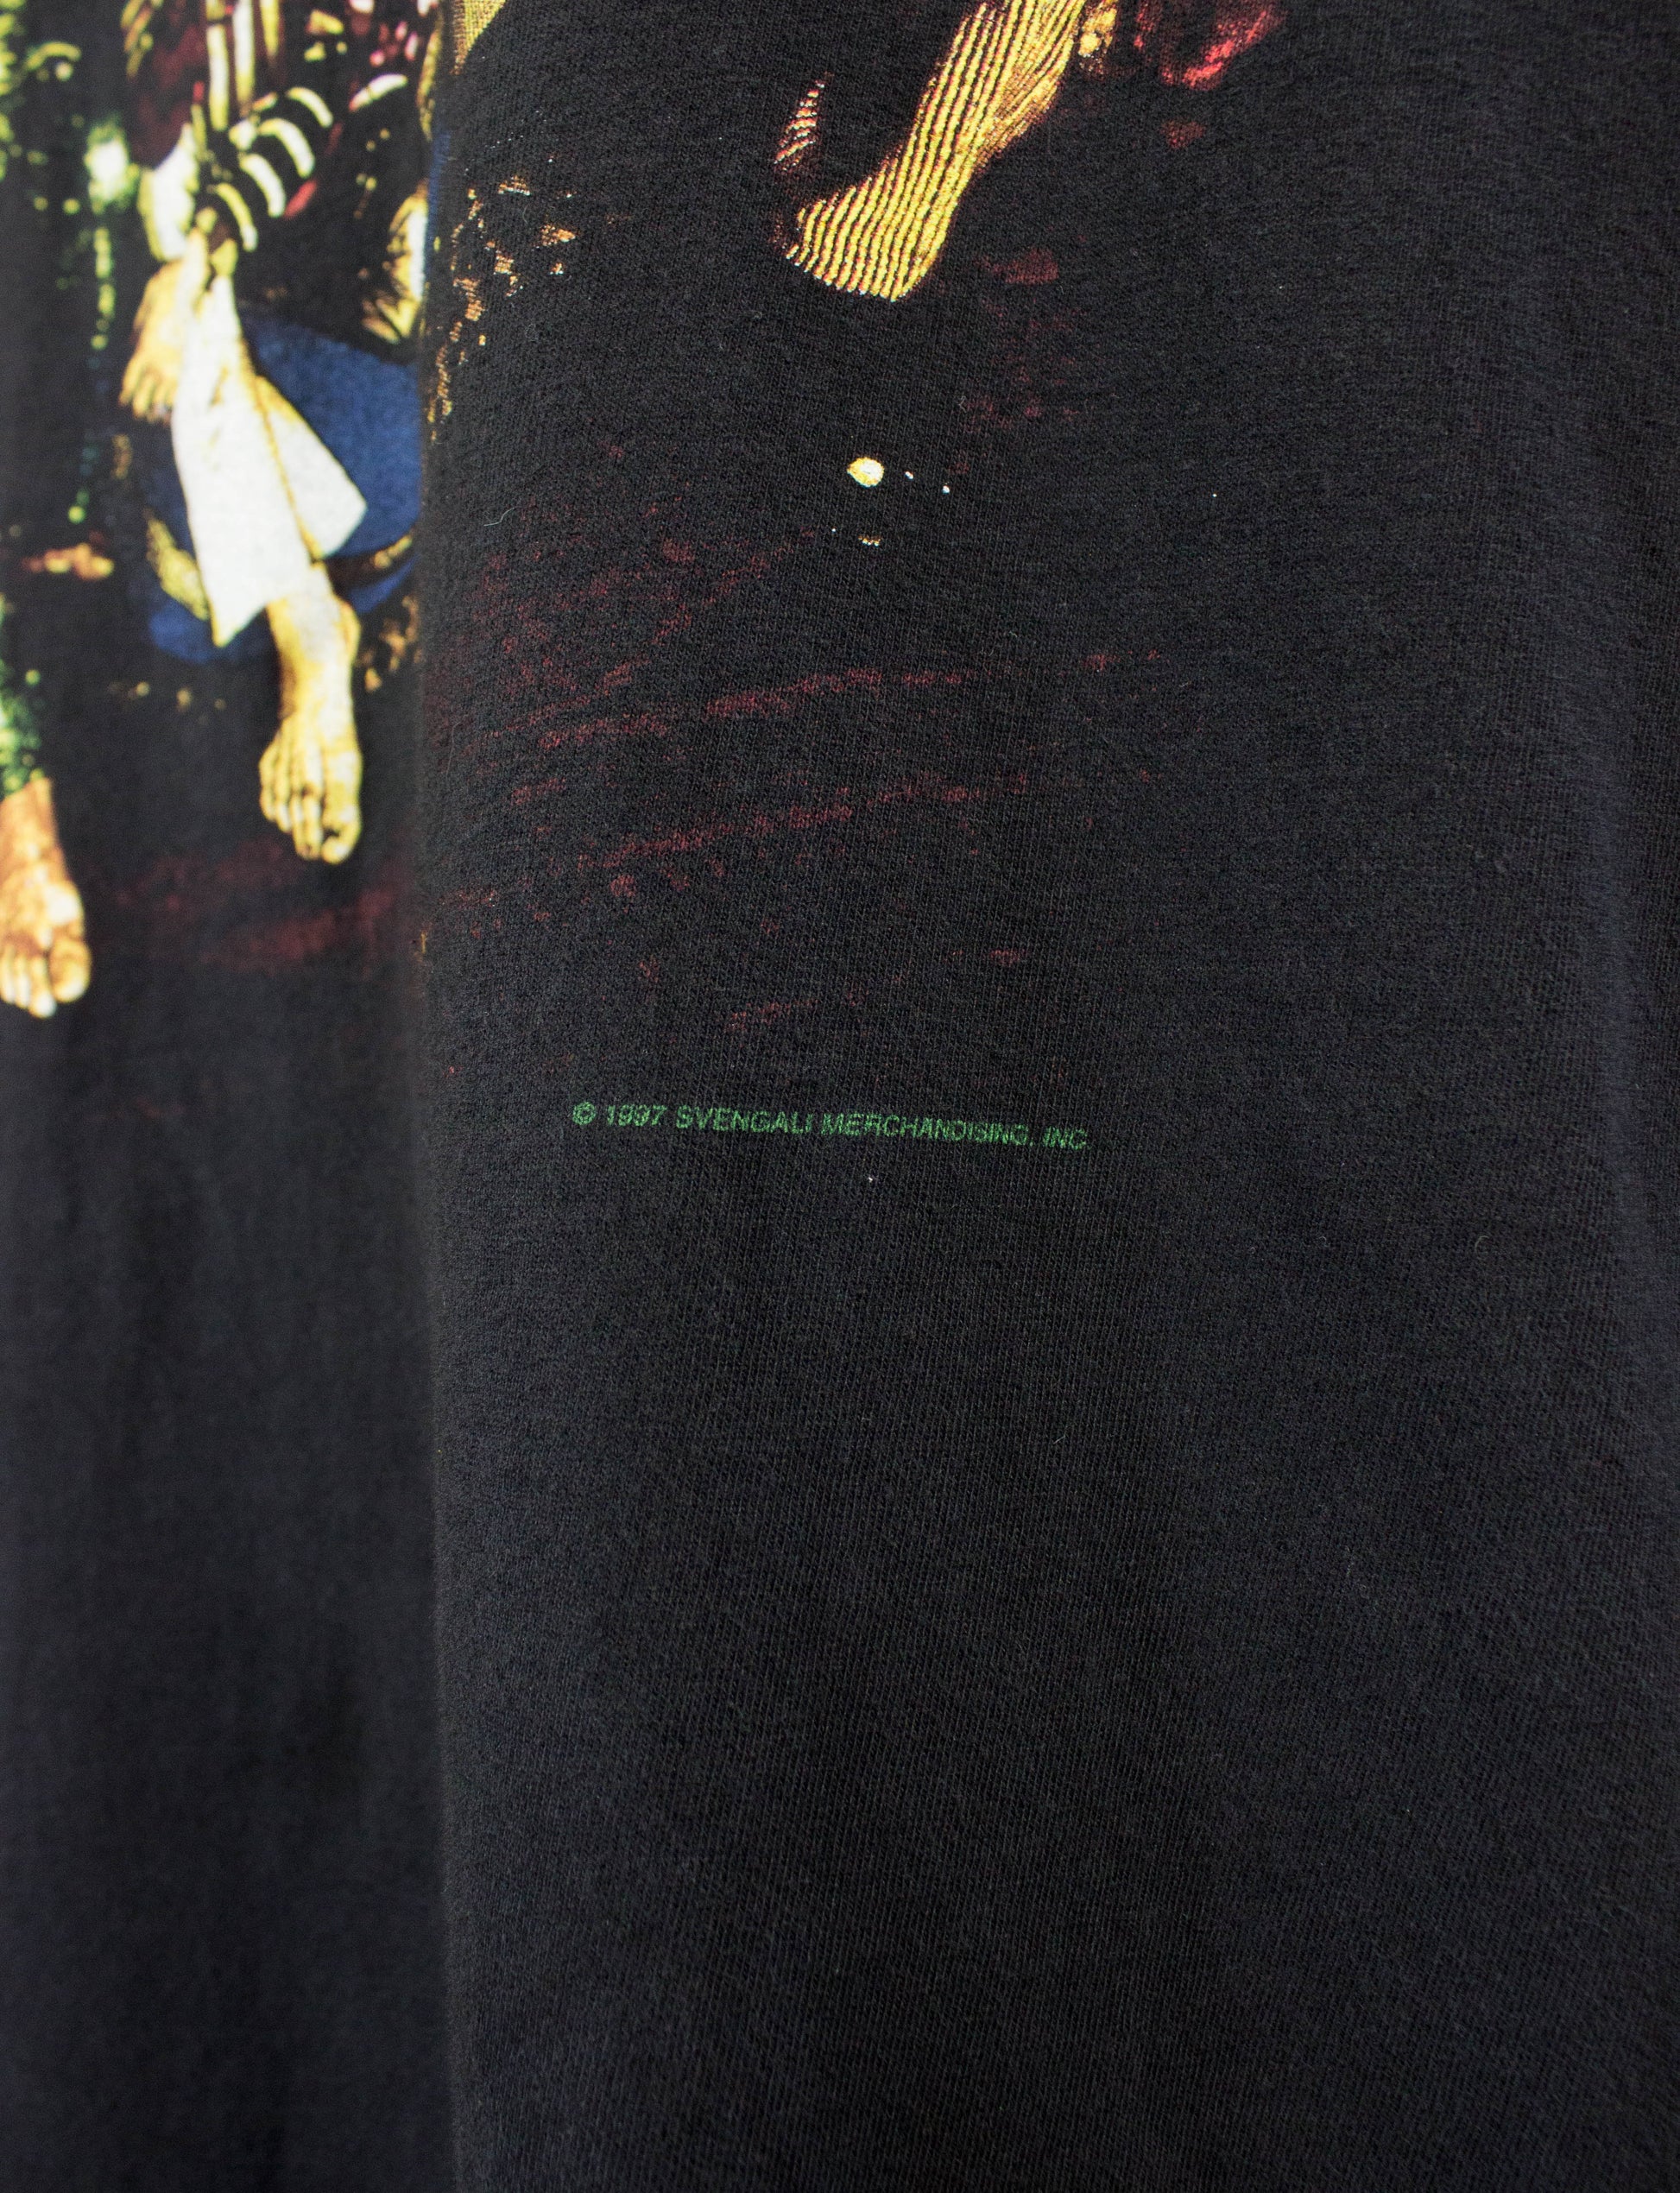 Aerosmith 1997 Nine Lives North America Tour Black Concert T Shirt Unisex Large